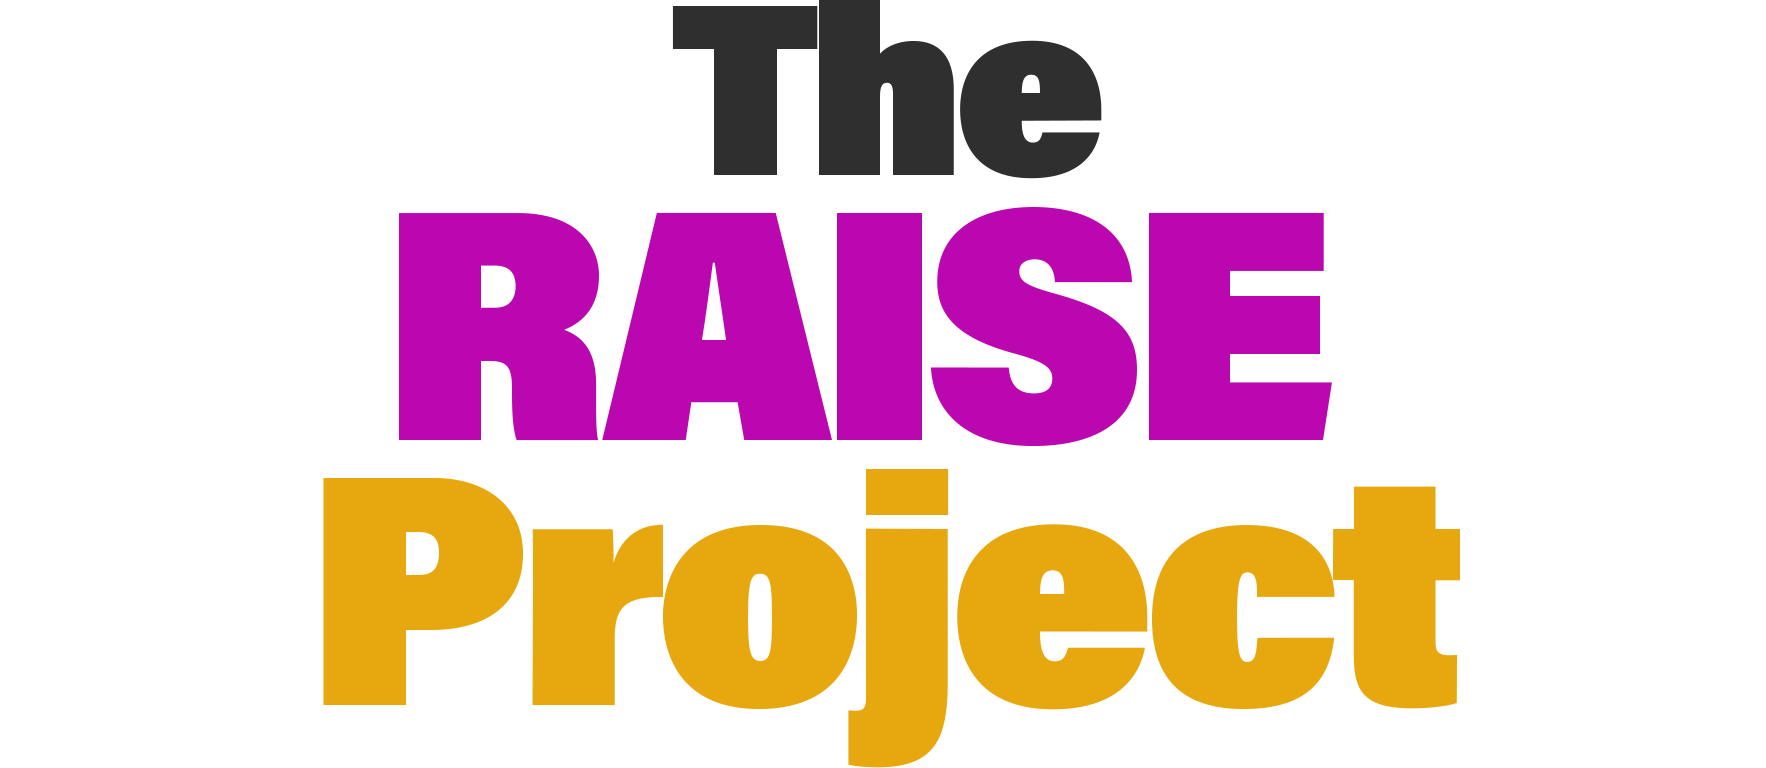 Raise Rroject tentative logo - main